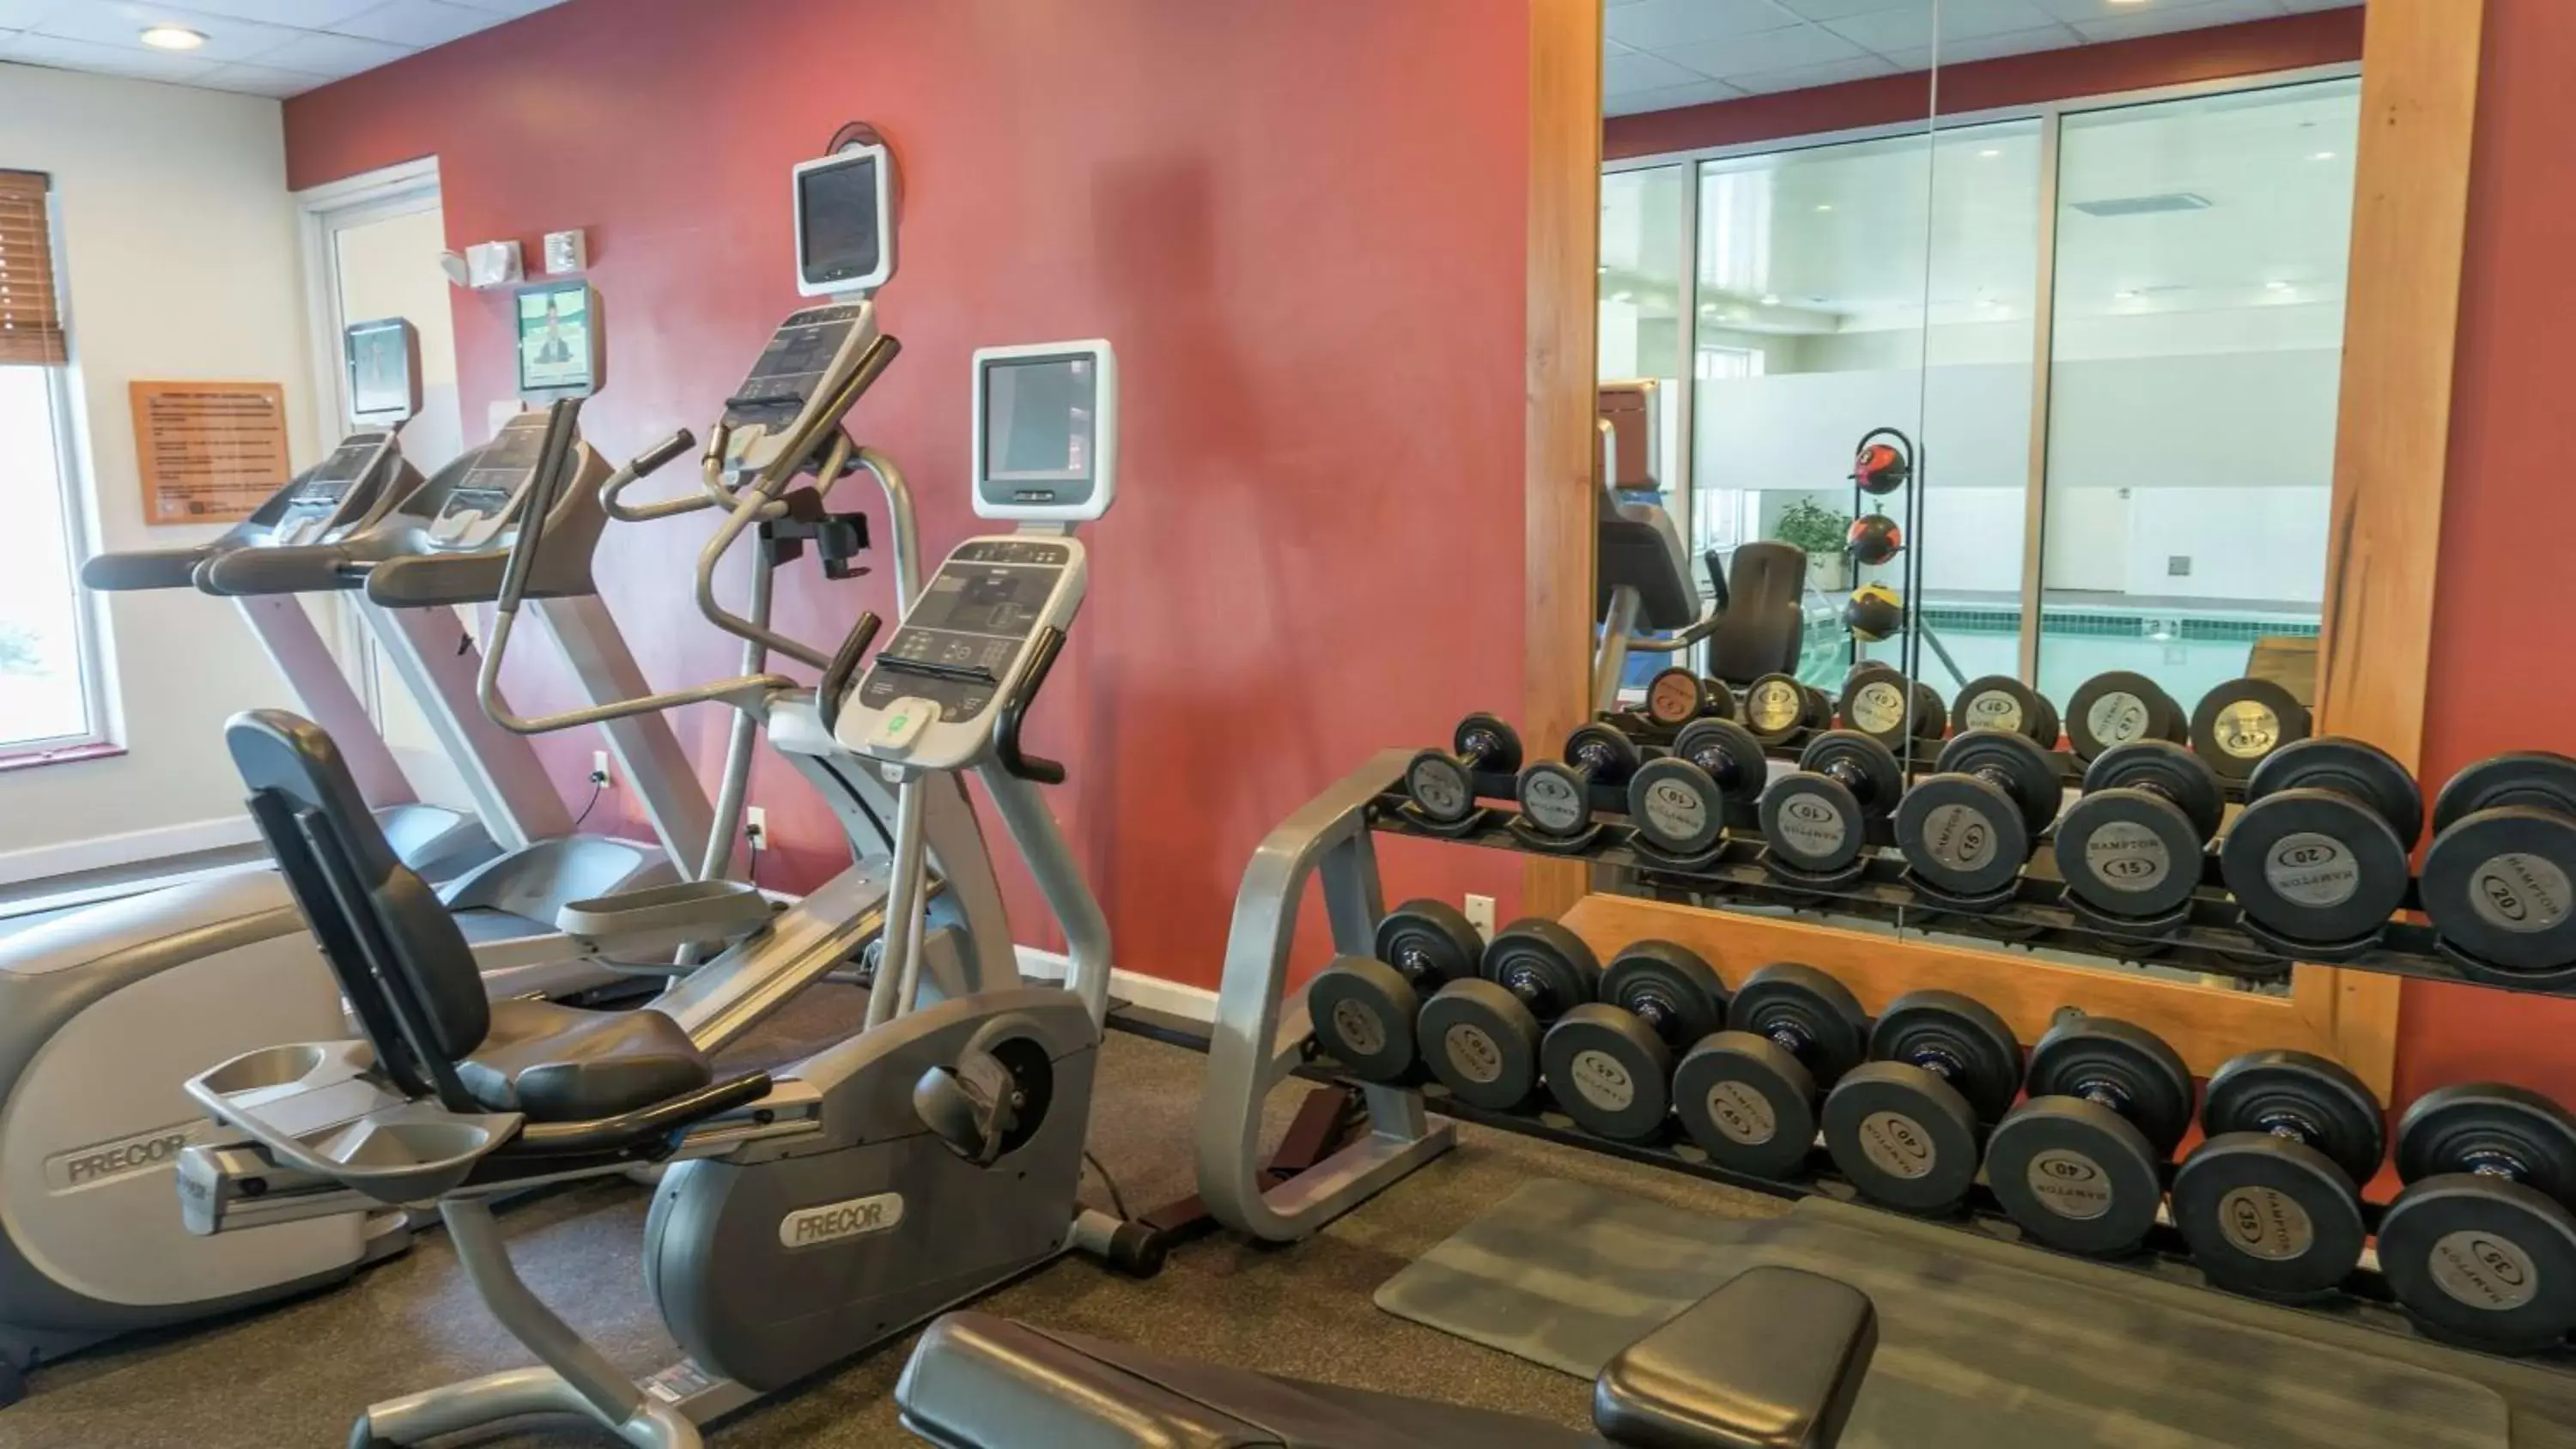 Fitness centre/facilities, Fitness Center/Facilities in Hilton Garden Inn Plymouth